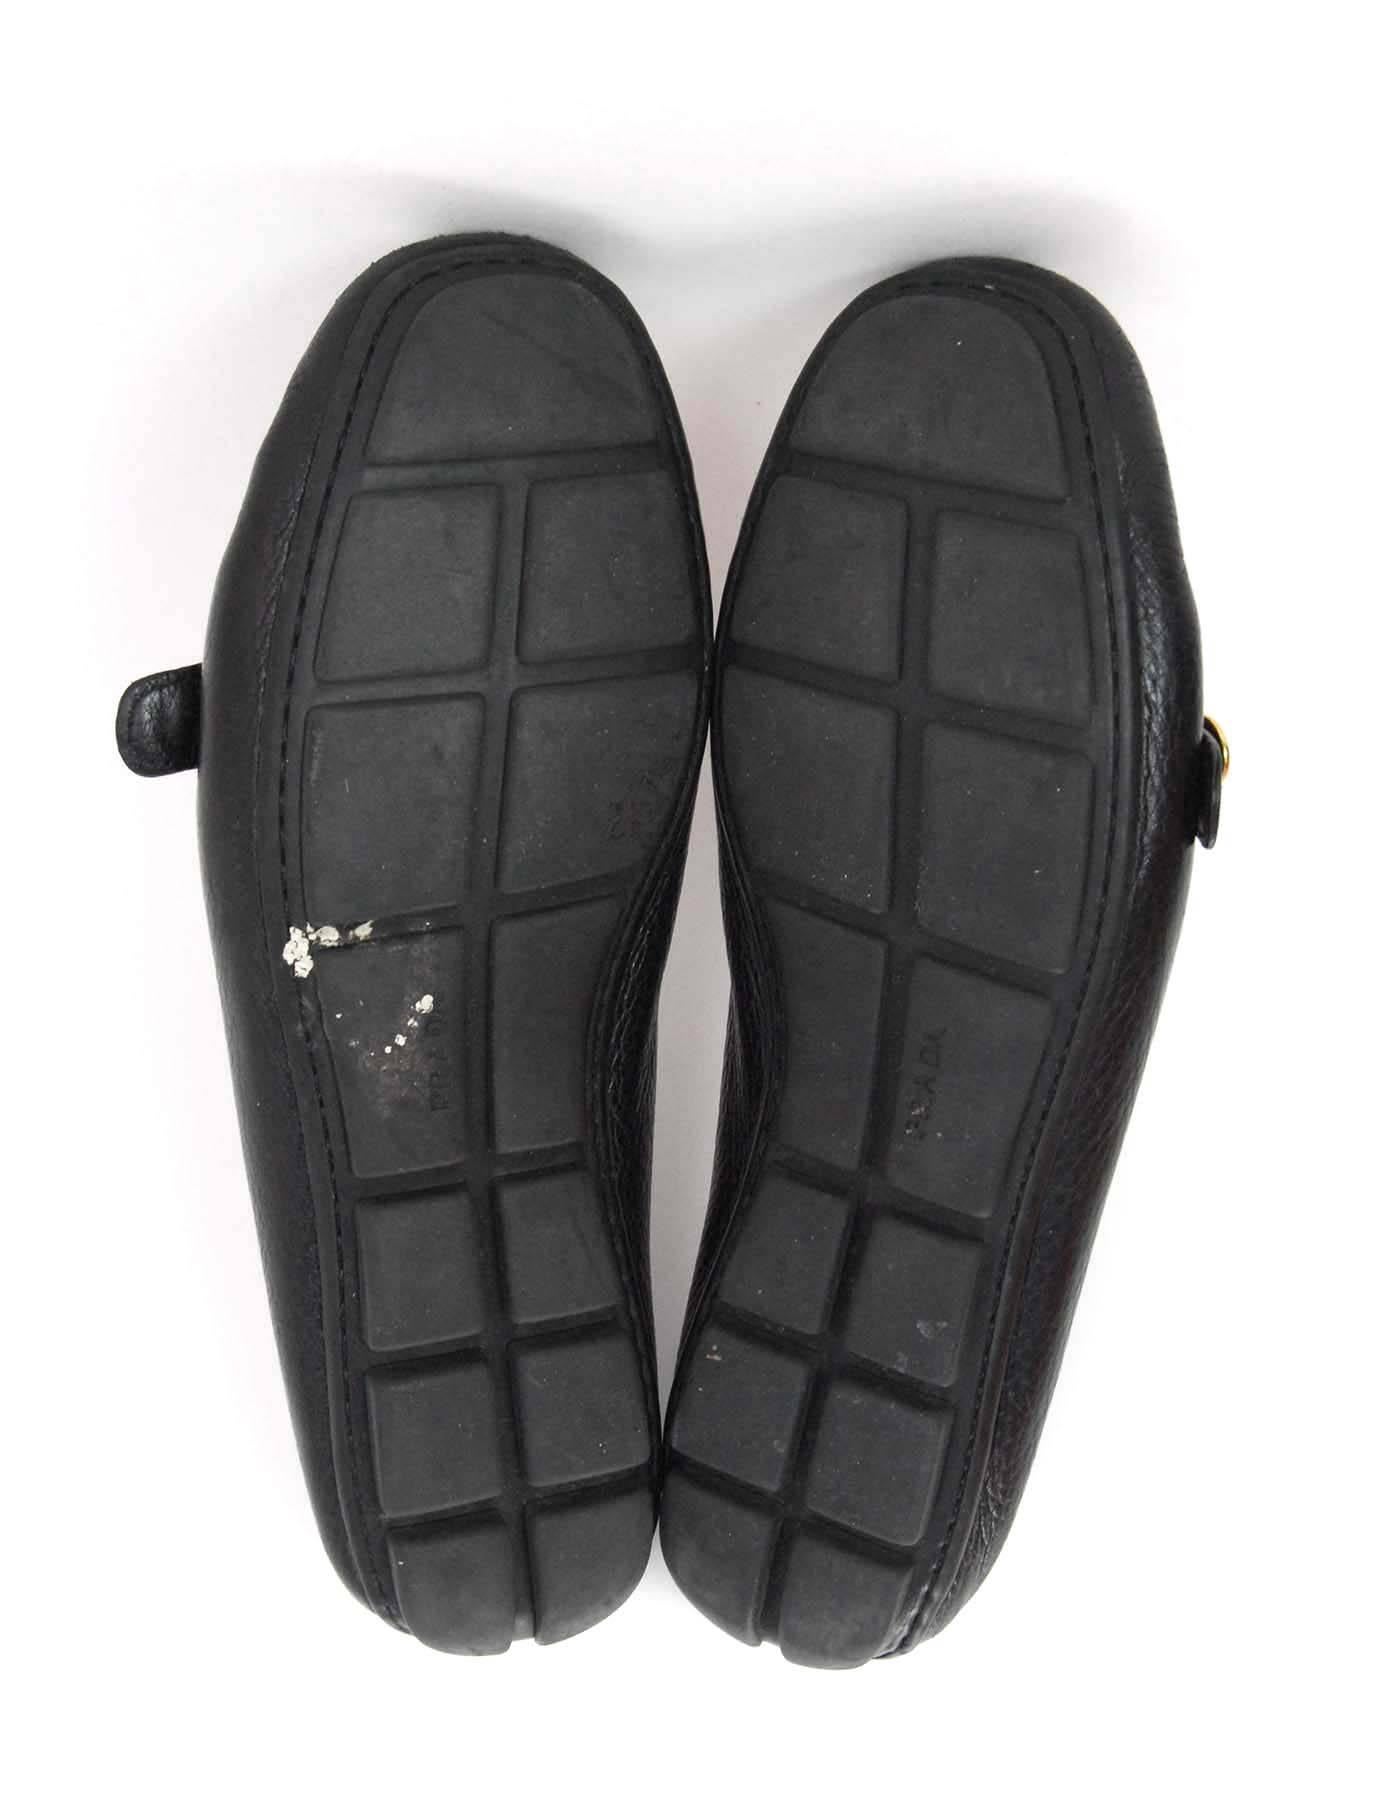 Prada Black Leather Driving Loafers Sz 40.5 3